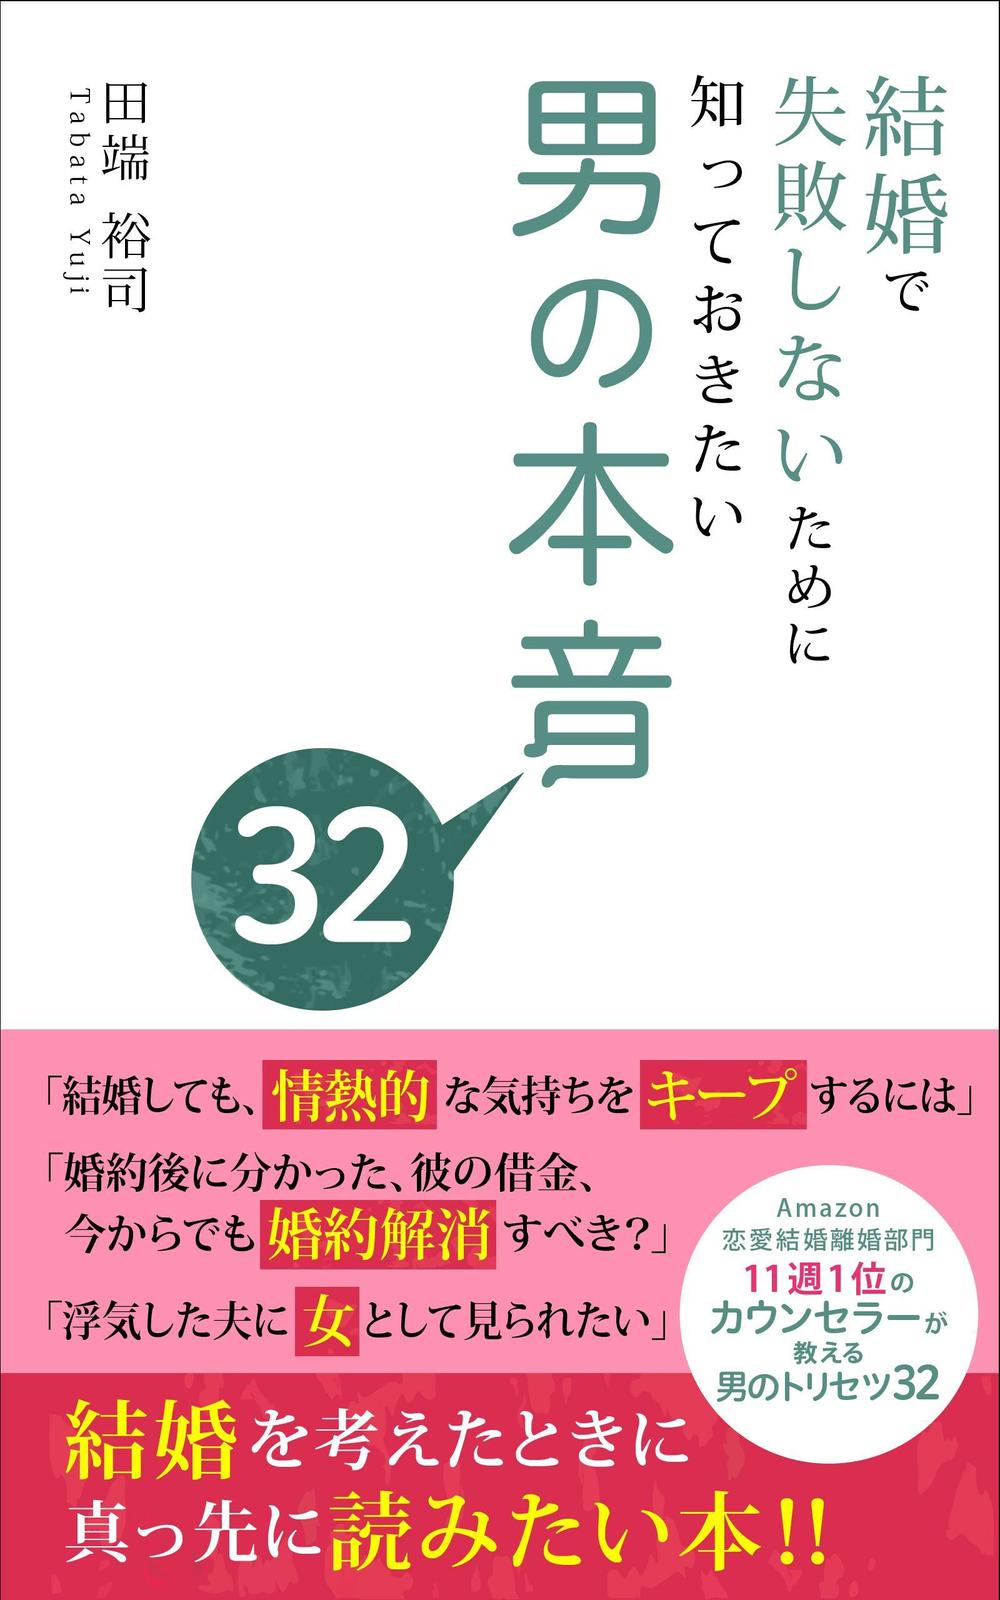 Kindle本-01.jpg